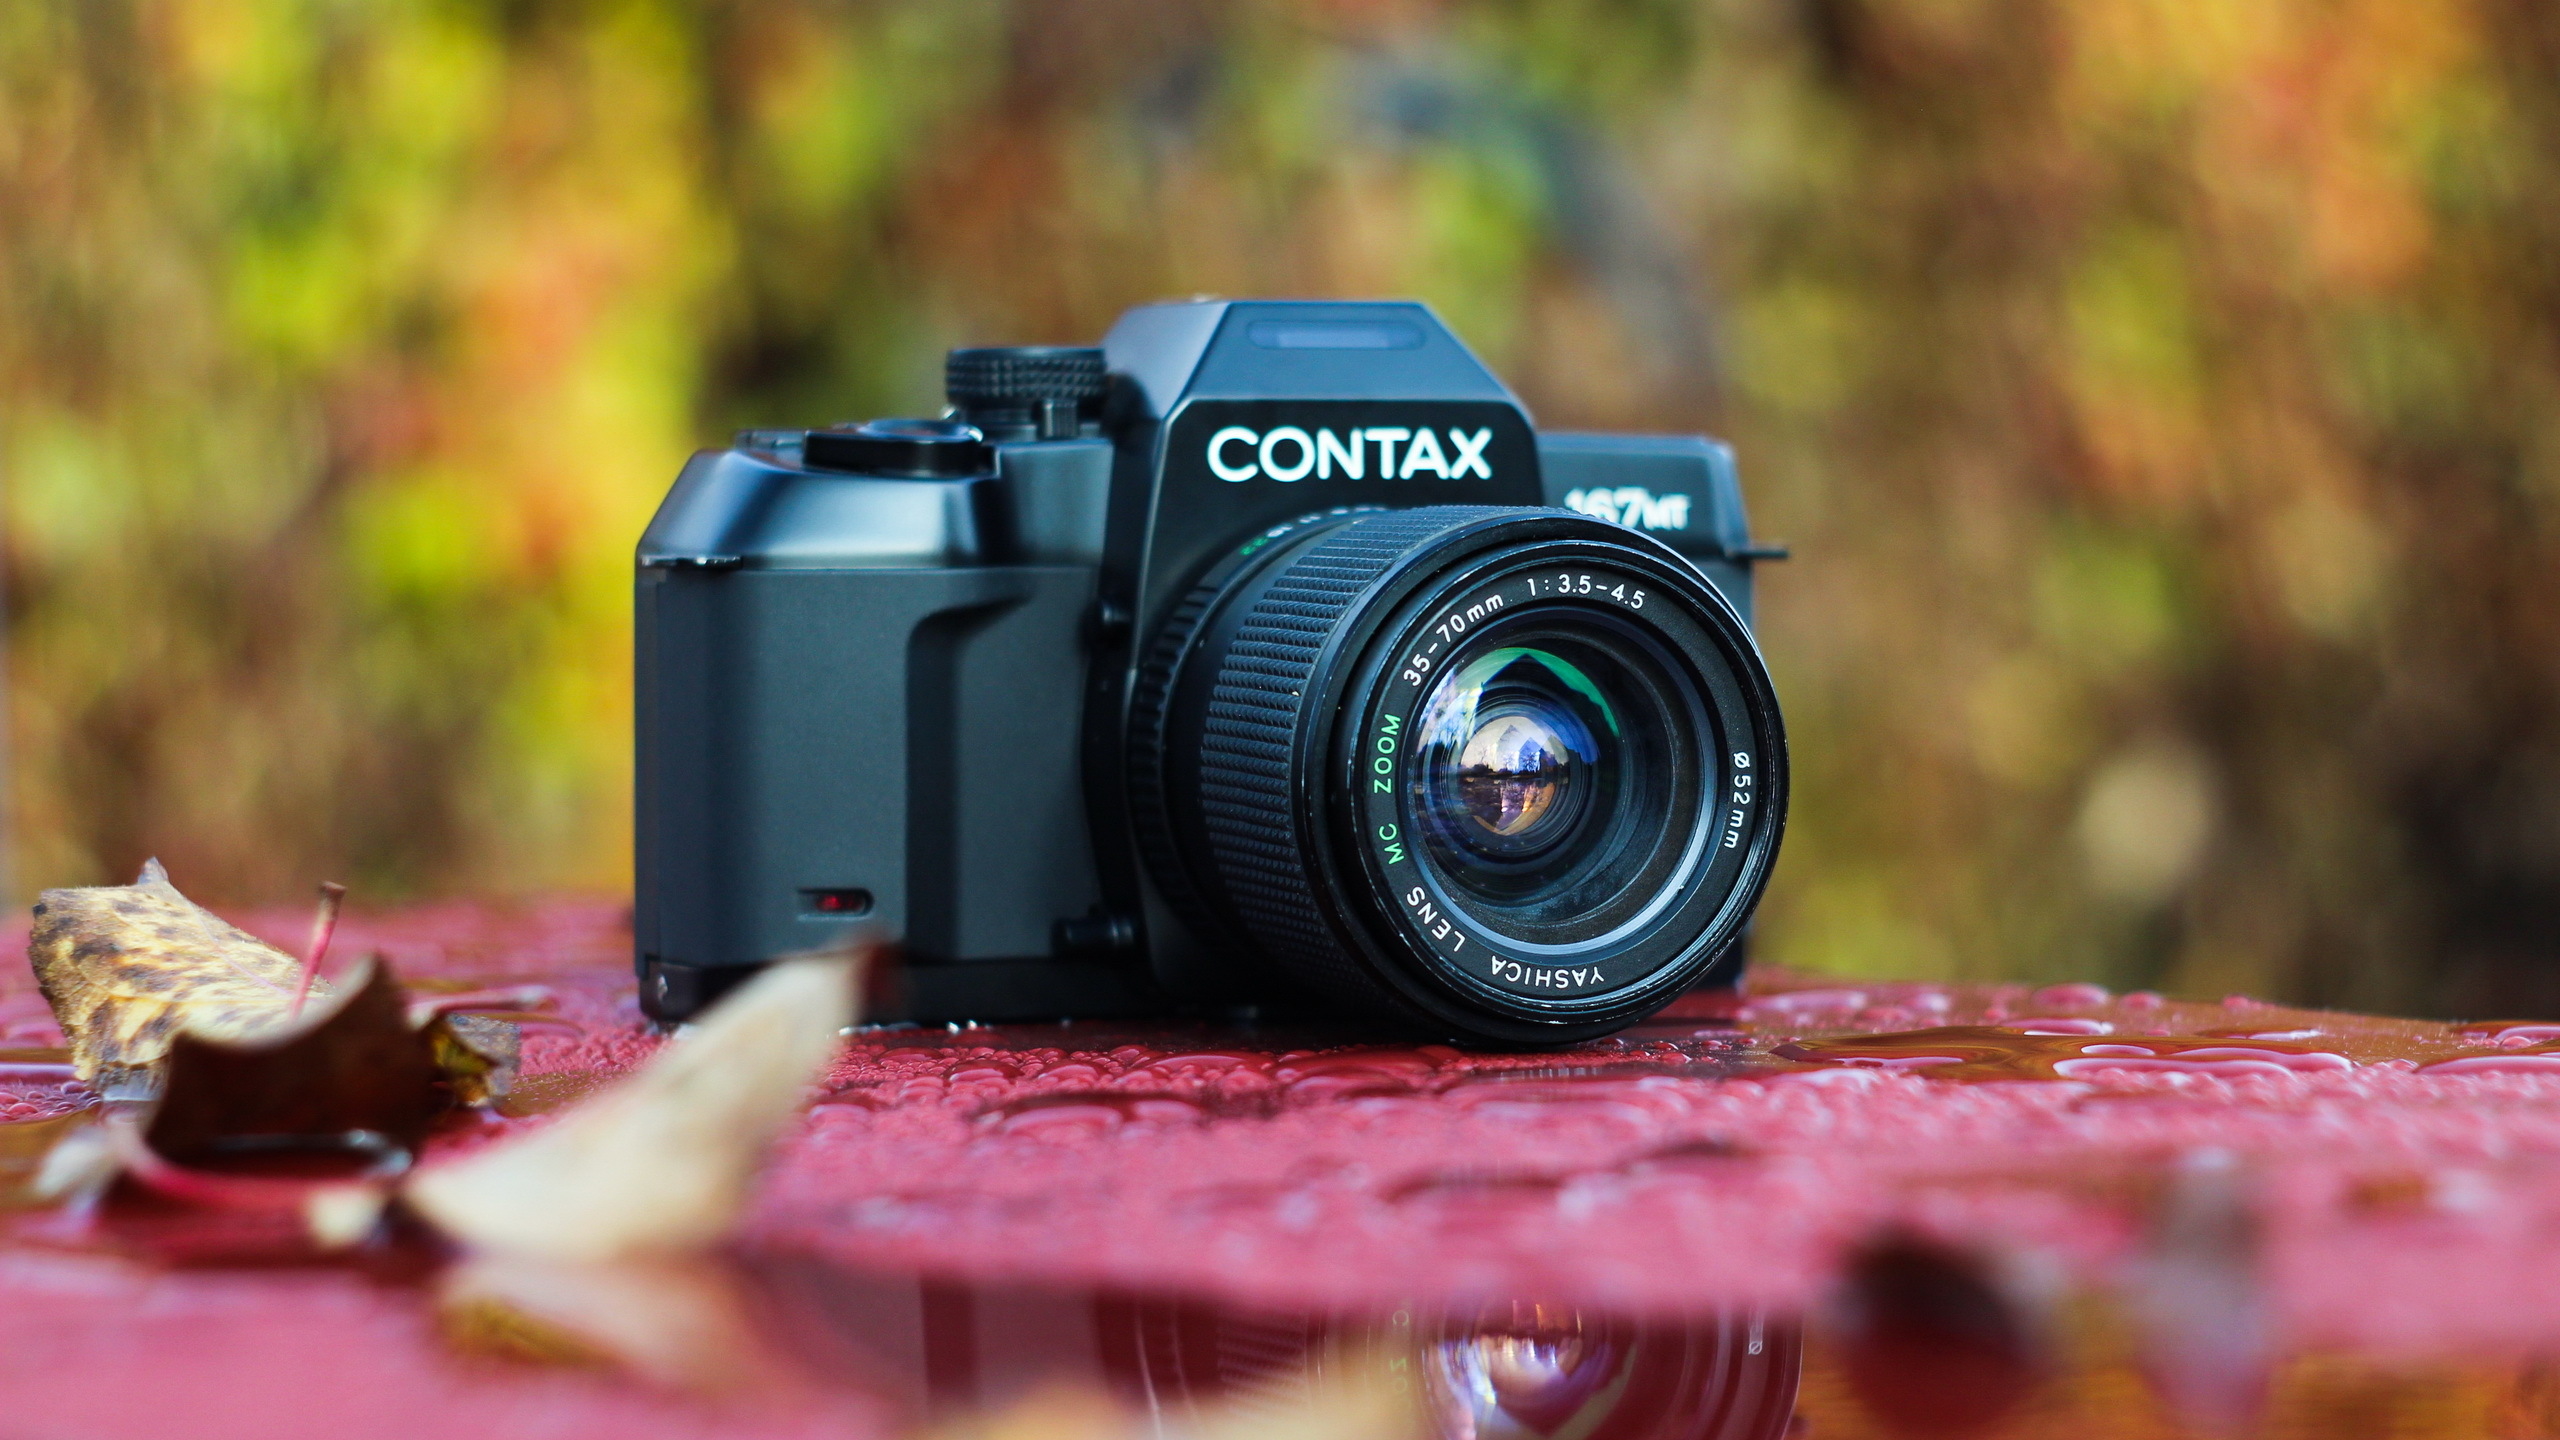 Contax 167mt Yashica Lens Camera 1440p Resolution